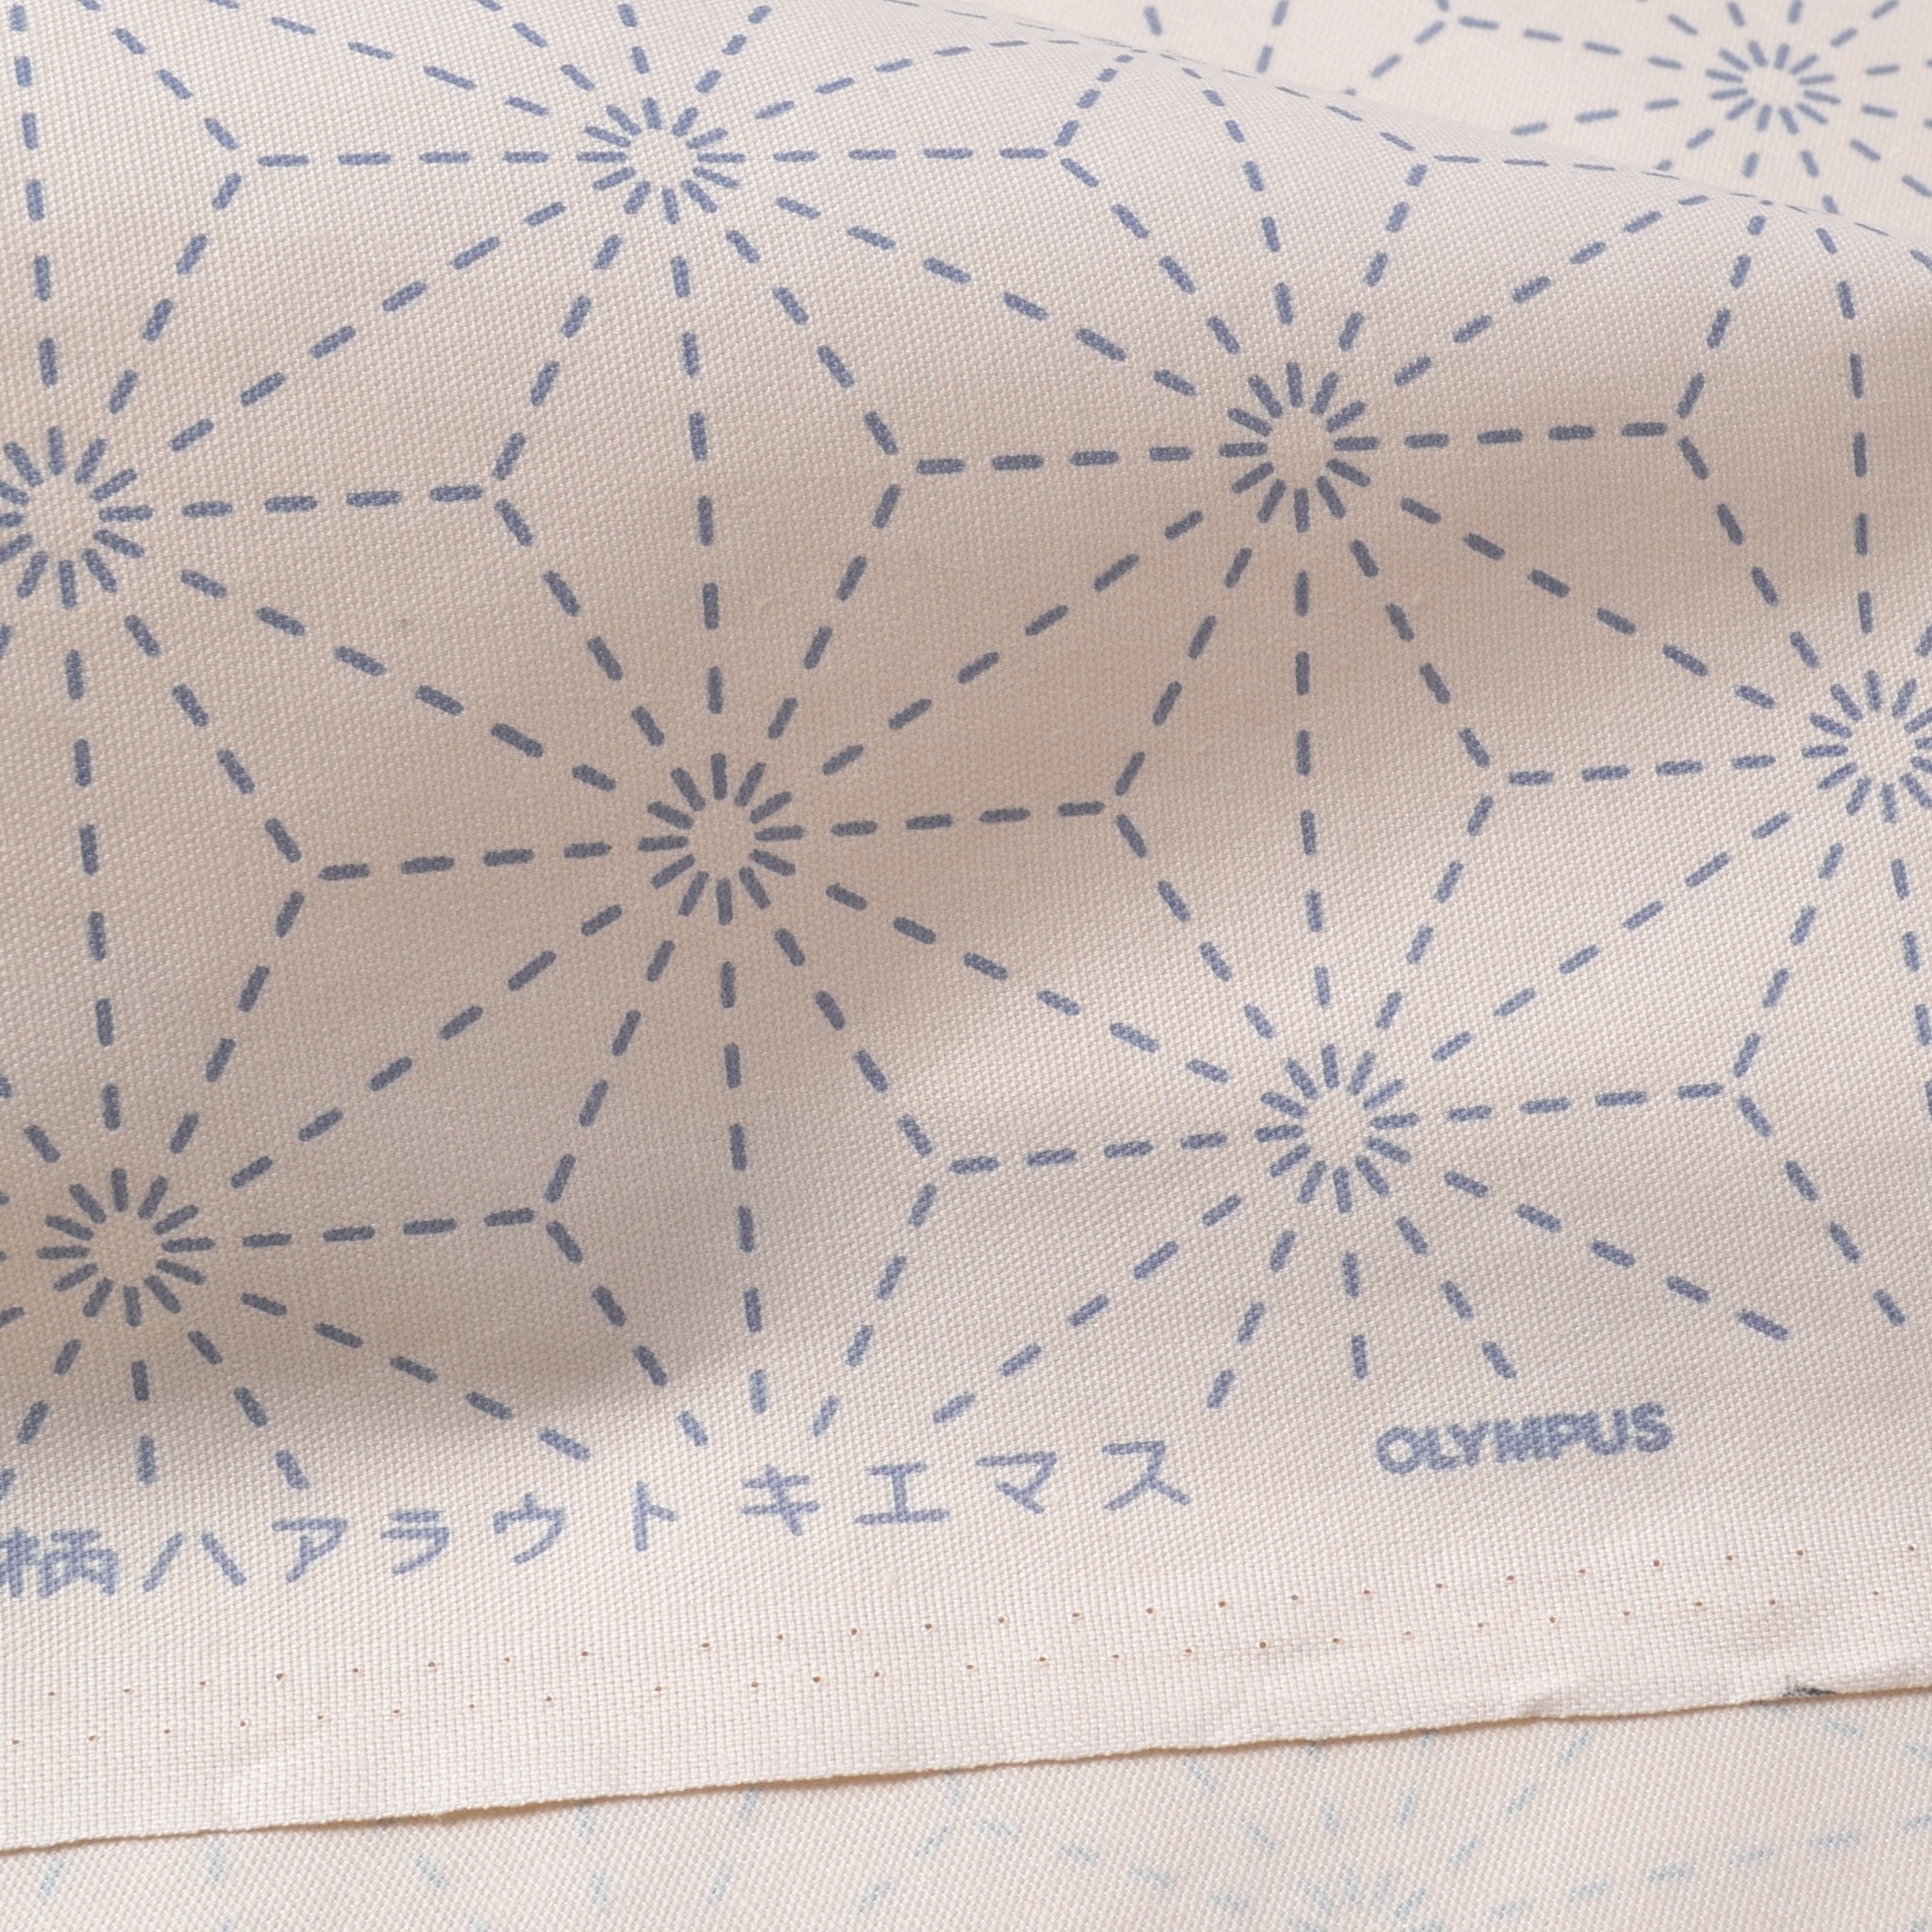 ready to stitch wash out printed hemp leaf sashiko fabric